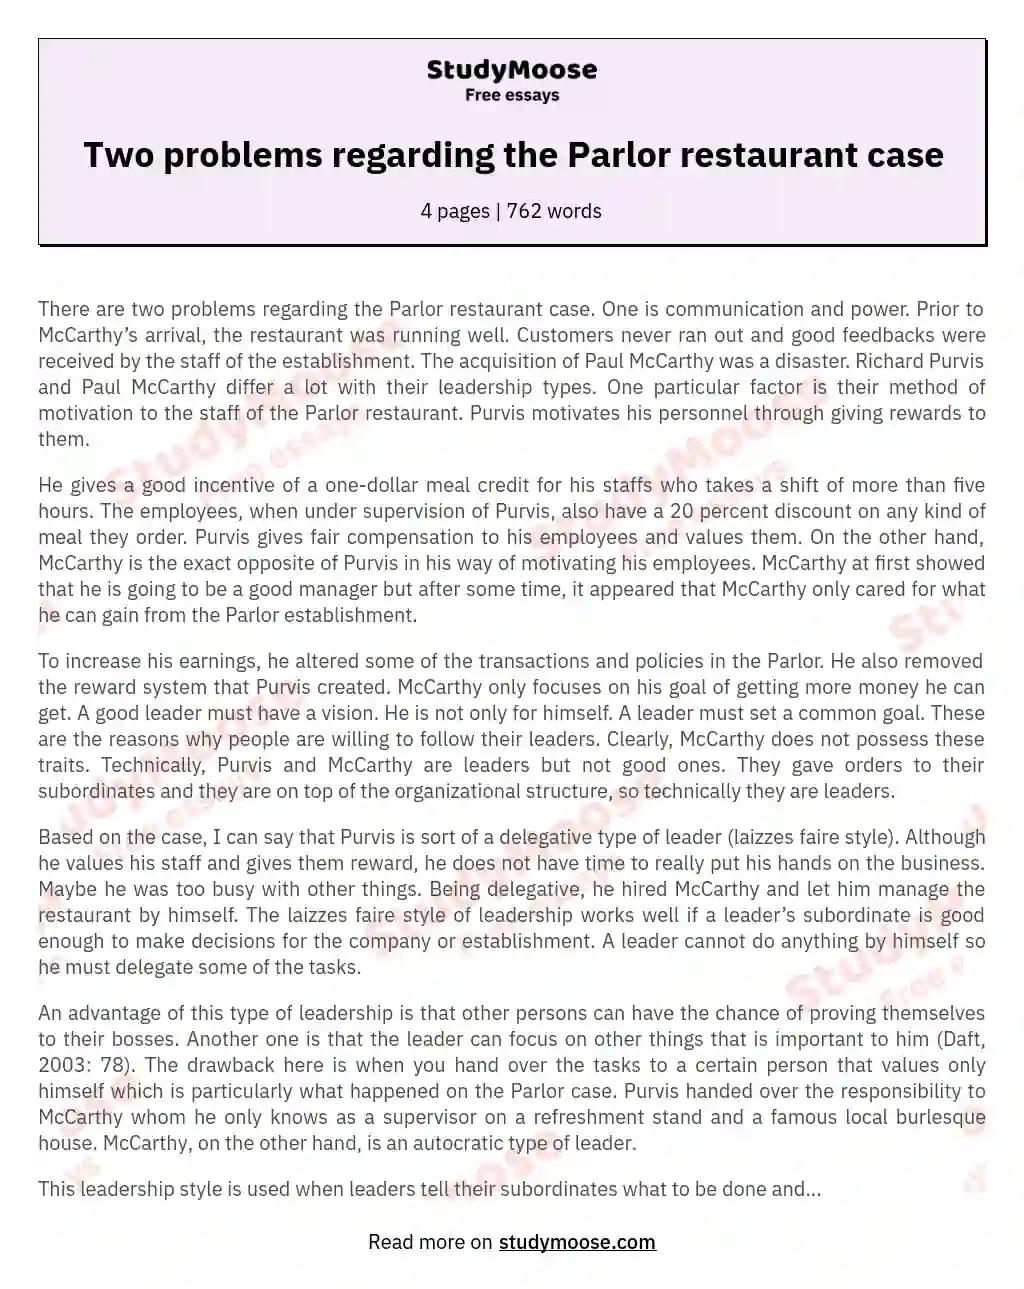 Two problems regarding the Parlor restaurant case essay